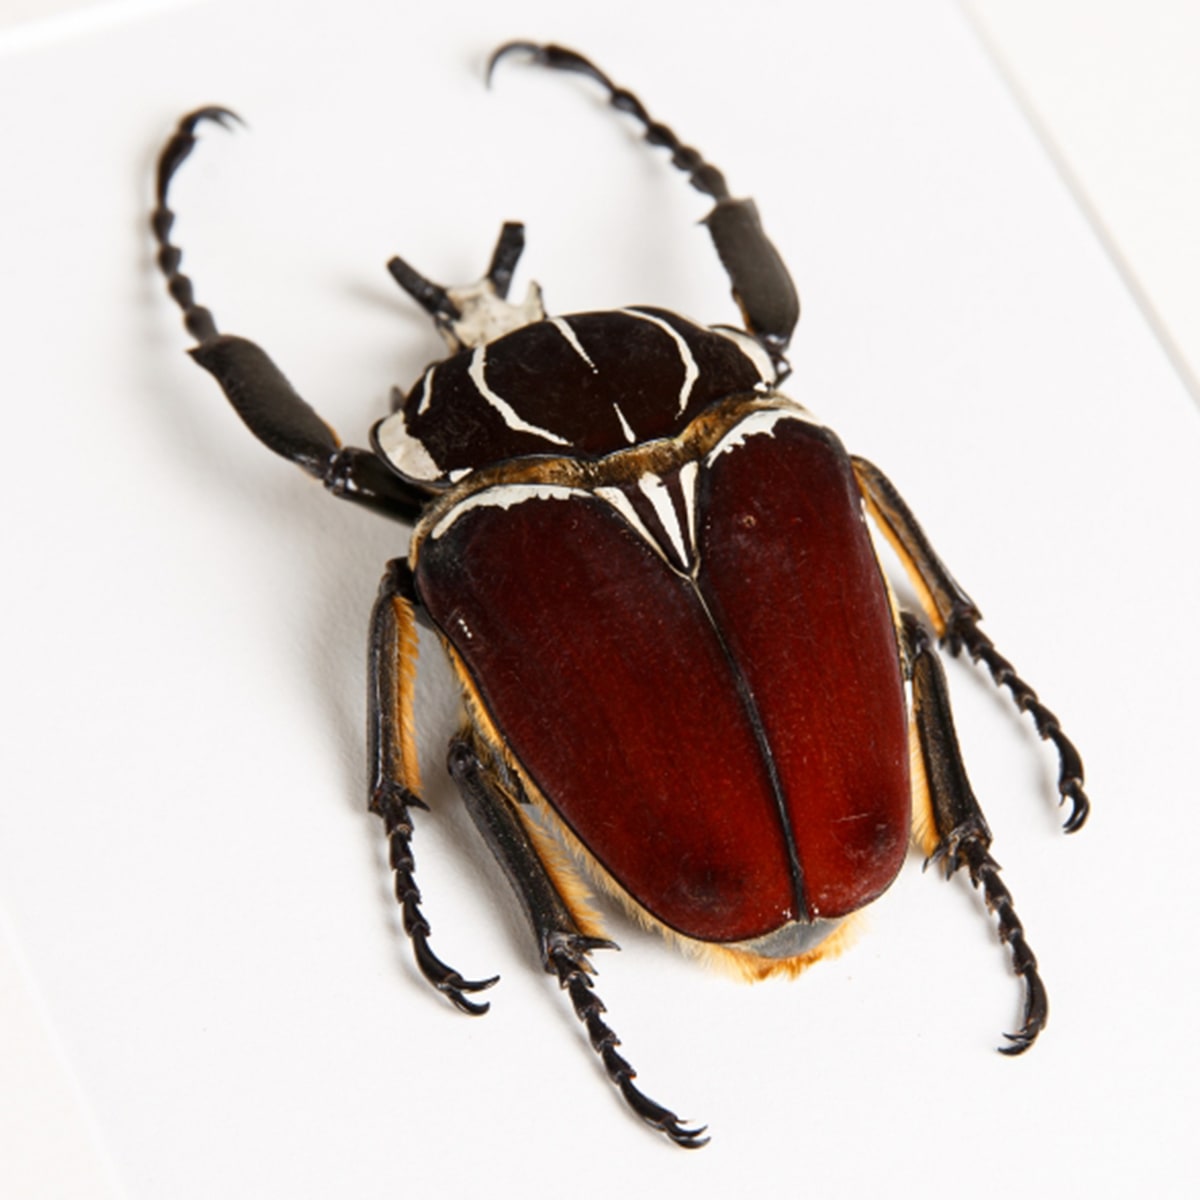 Goliath Beetle in Box Frame (Goliathus goliatus)